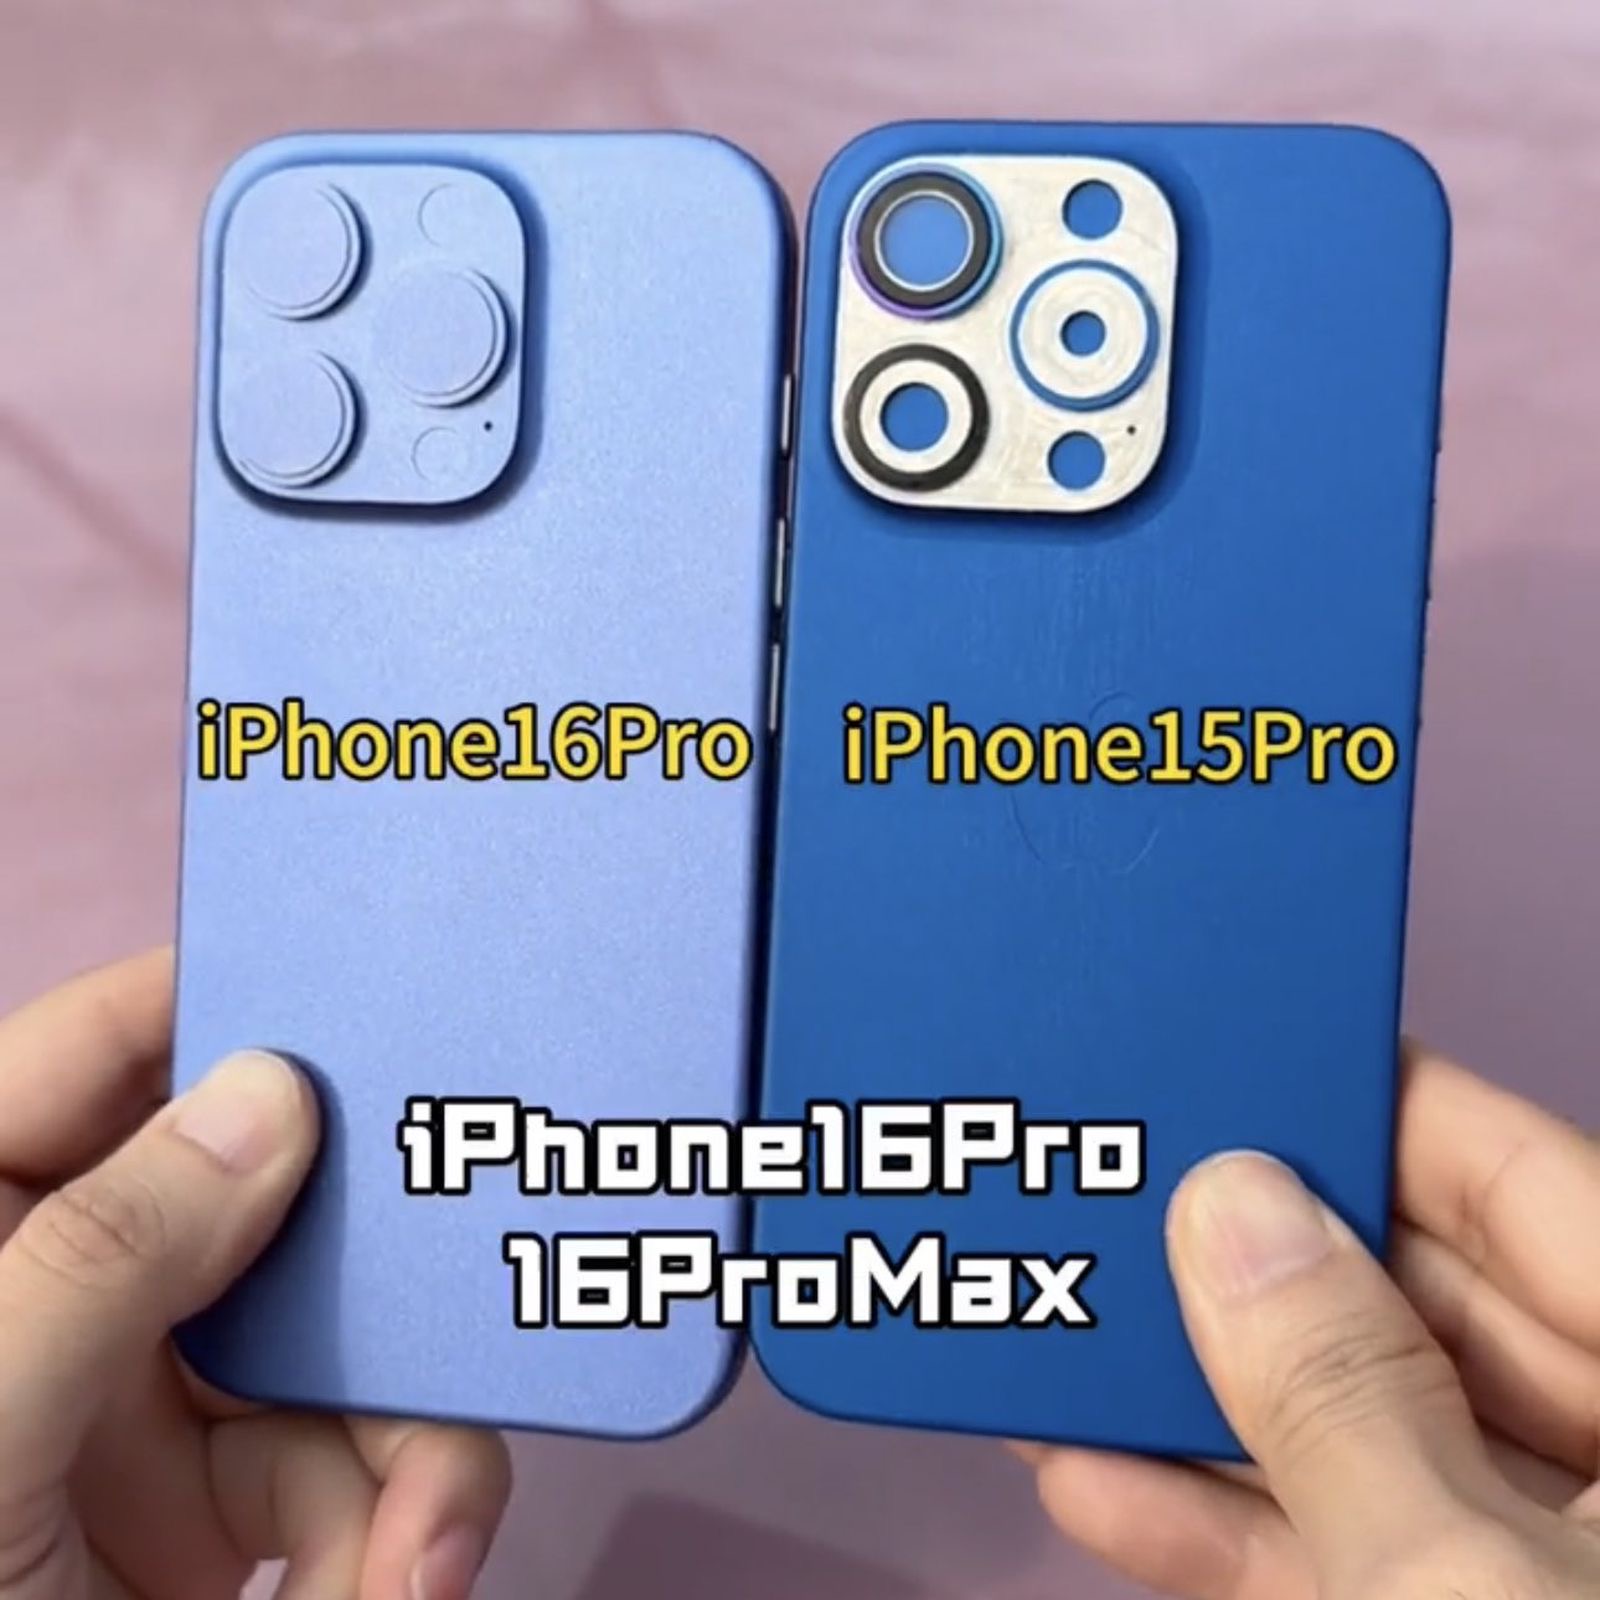 iPhone 16 pro vs iPhone 15 pro